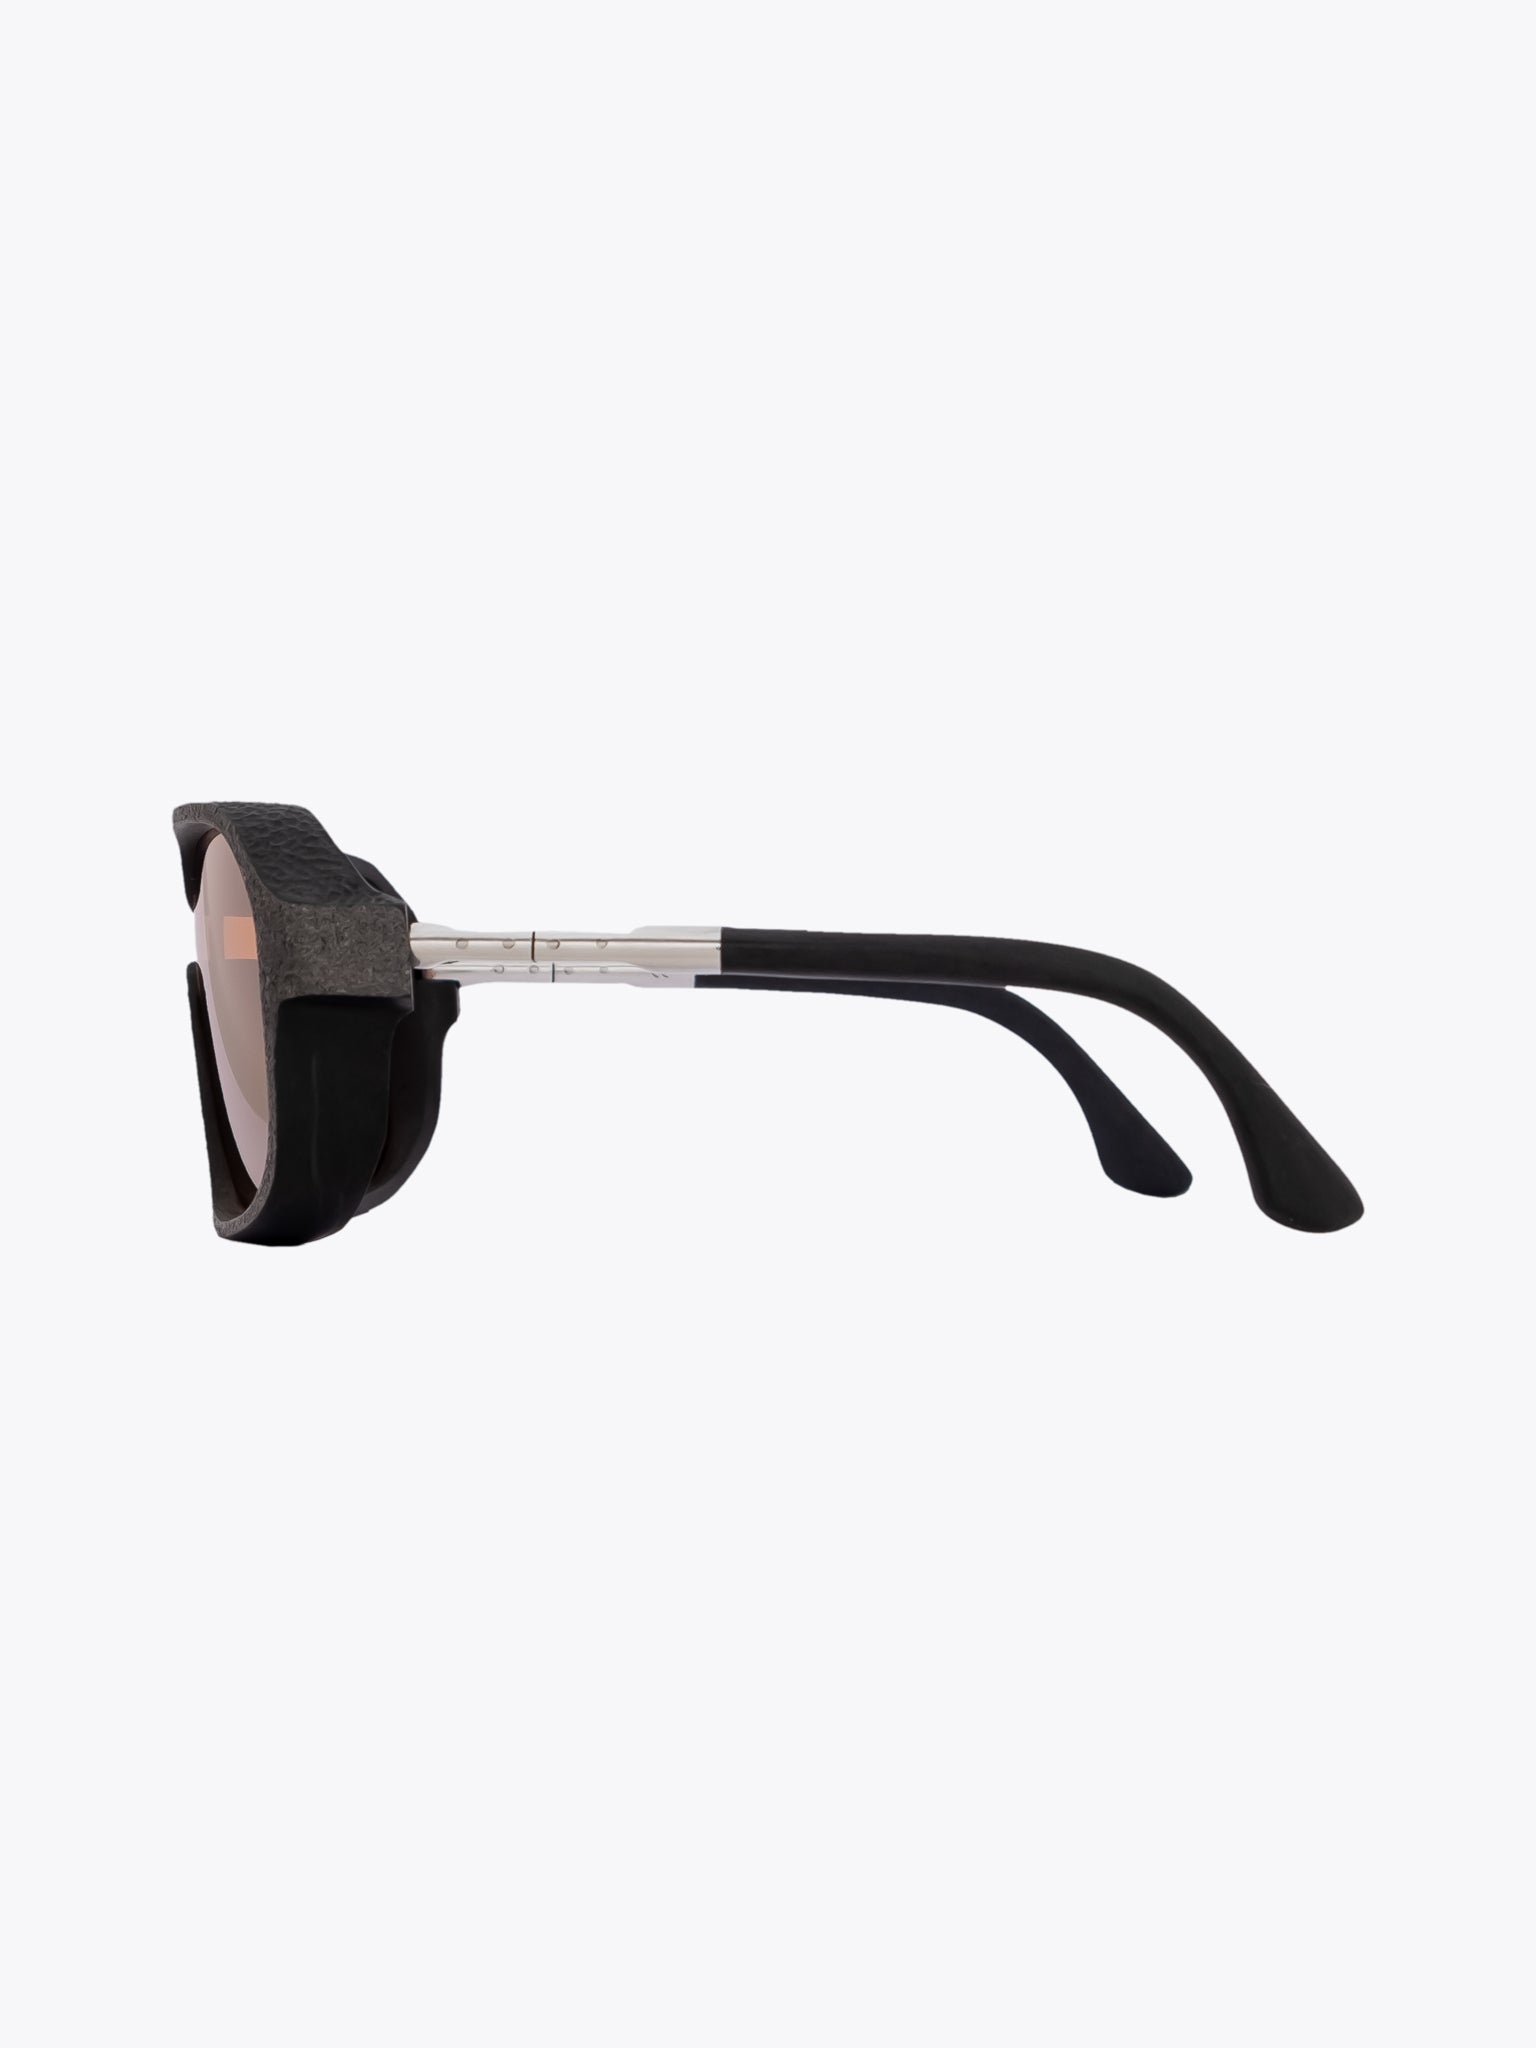 IMPURI Super Recycled Carbon Sunglasses Graphite